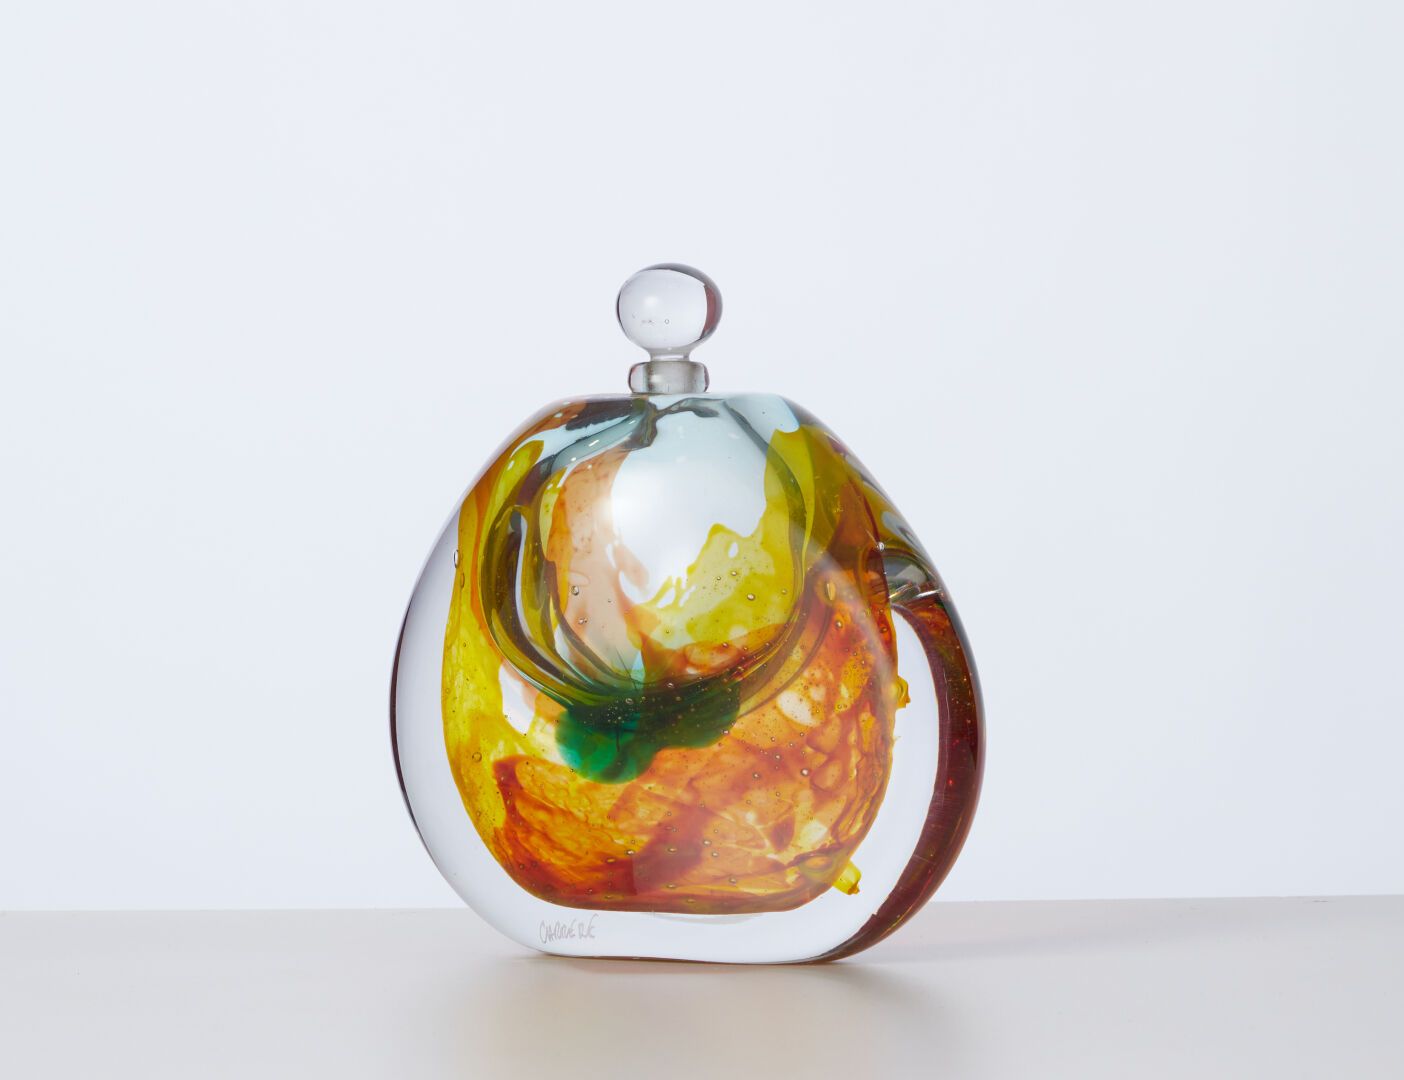 Null CARRERE Xavier (nacido en 1966)
Botella ovoide de vidrio
Altura: 16 cm